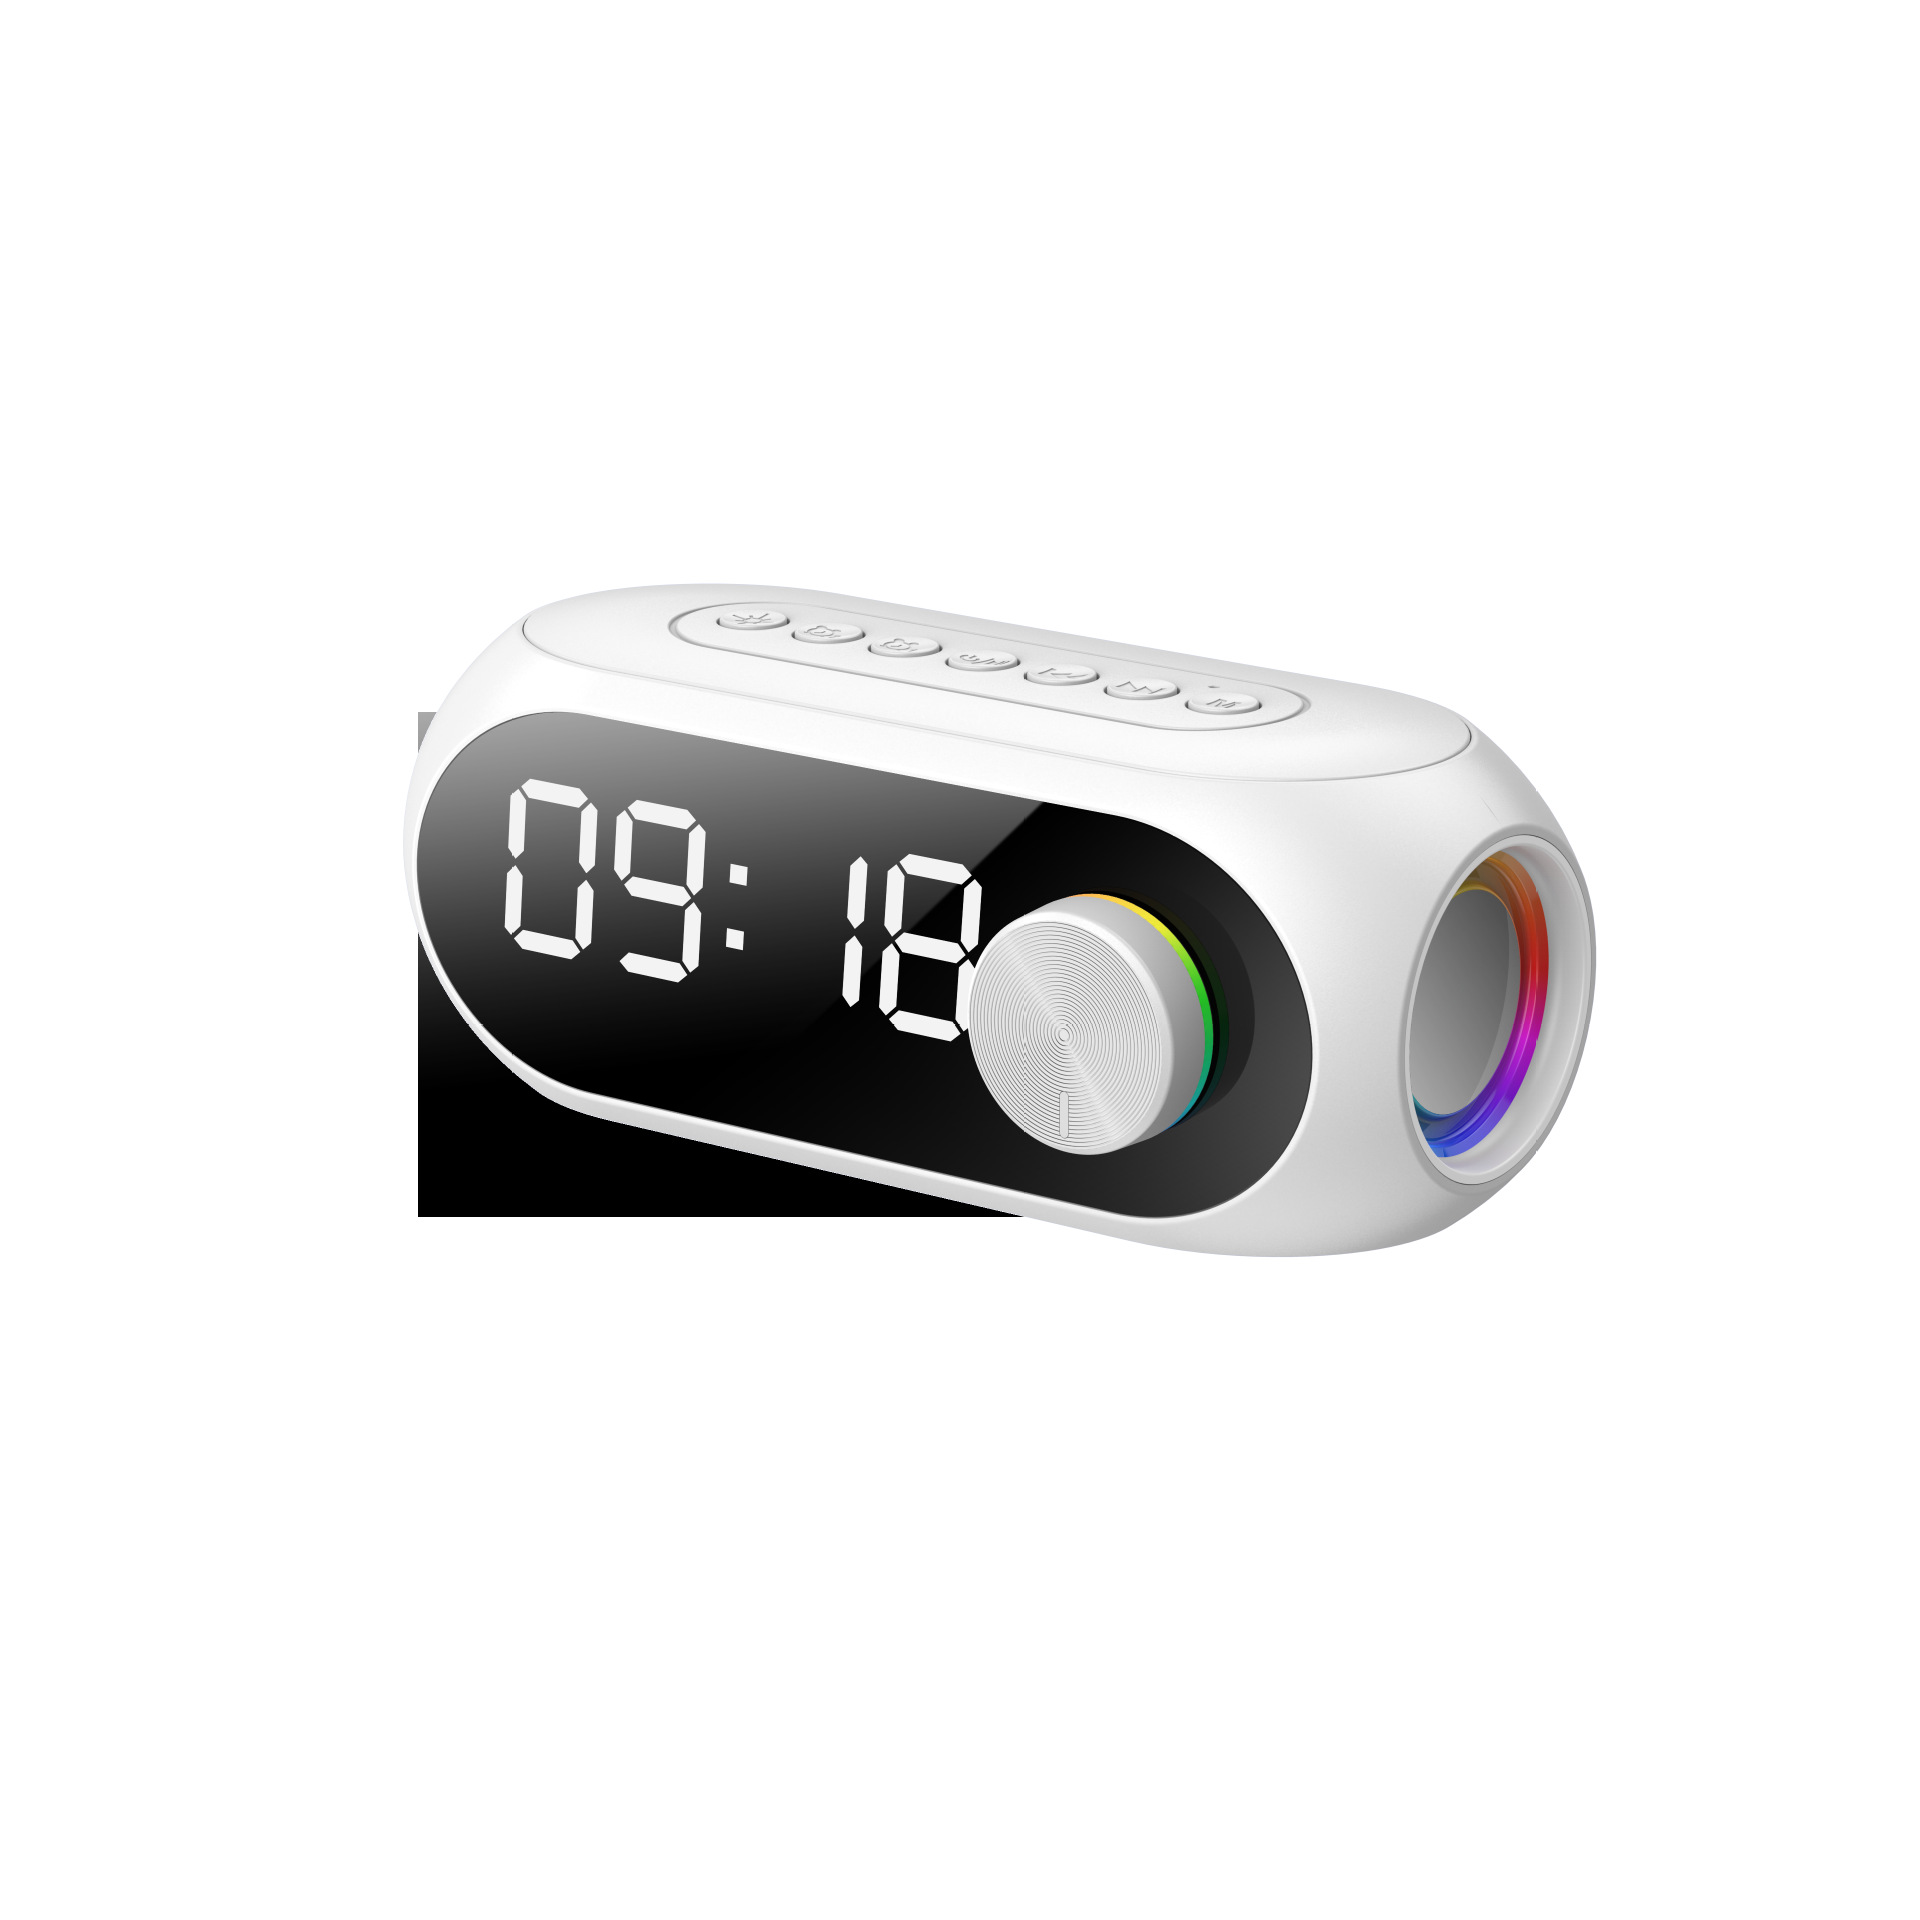 Waterproof Drop-proof S8 Wireless  Bluetooth-compatible  Speaker Alarm Clock Good Sound Quality Long Battery Life Perfect Desktop Companion white